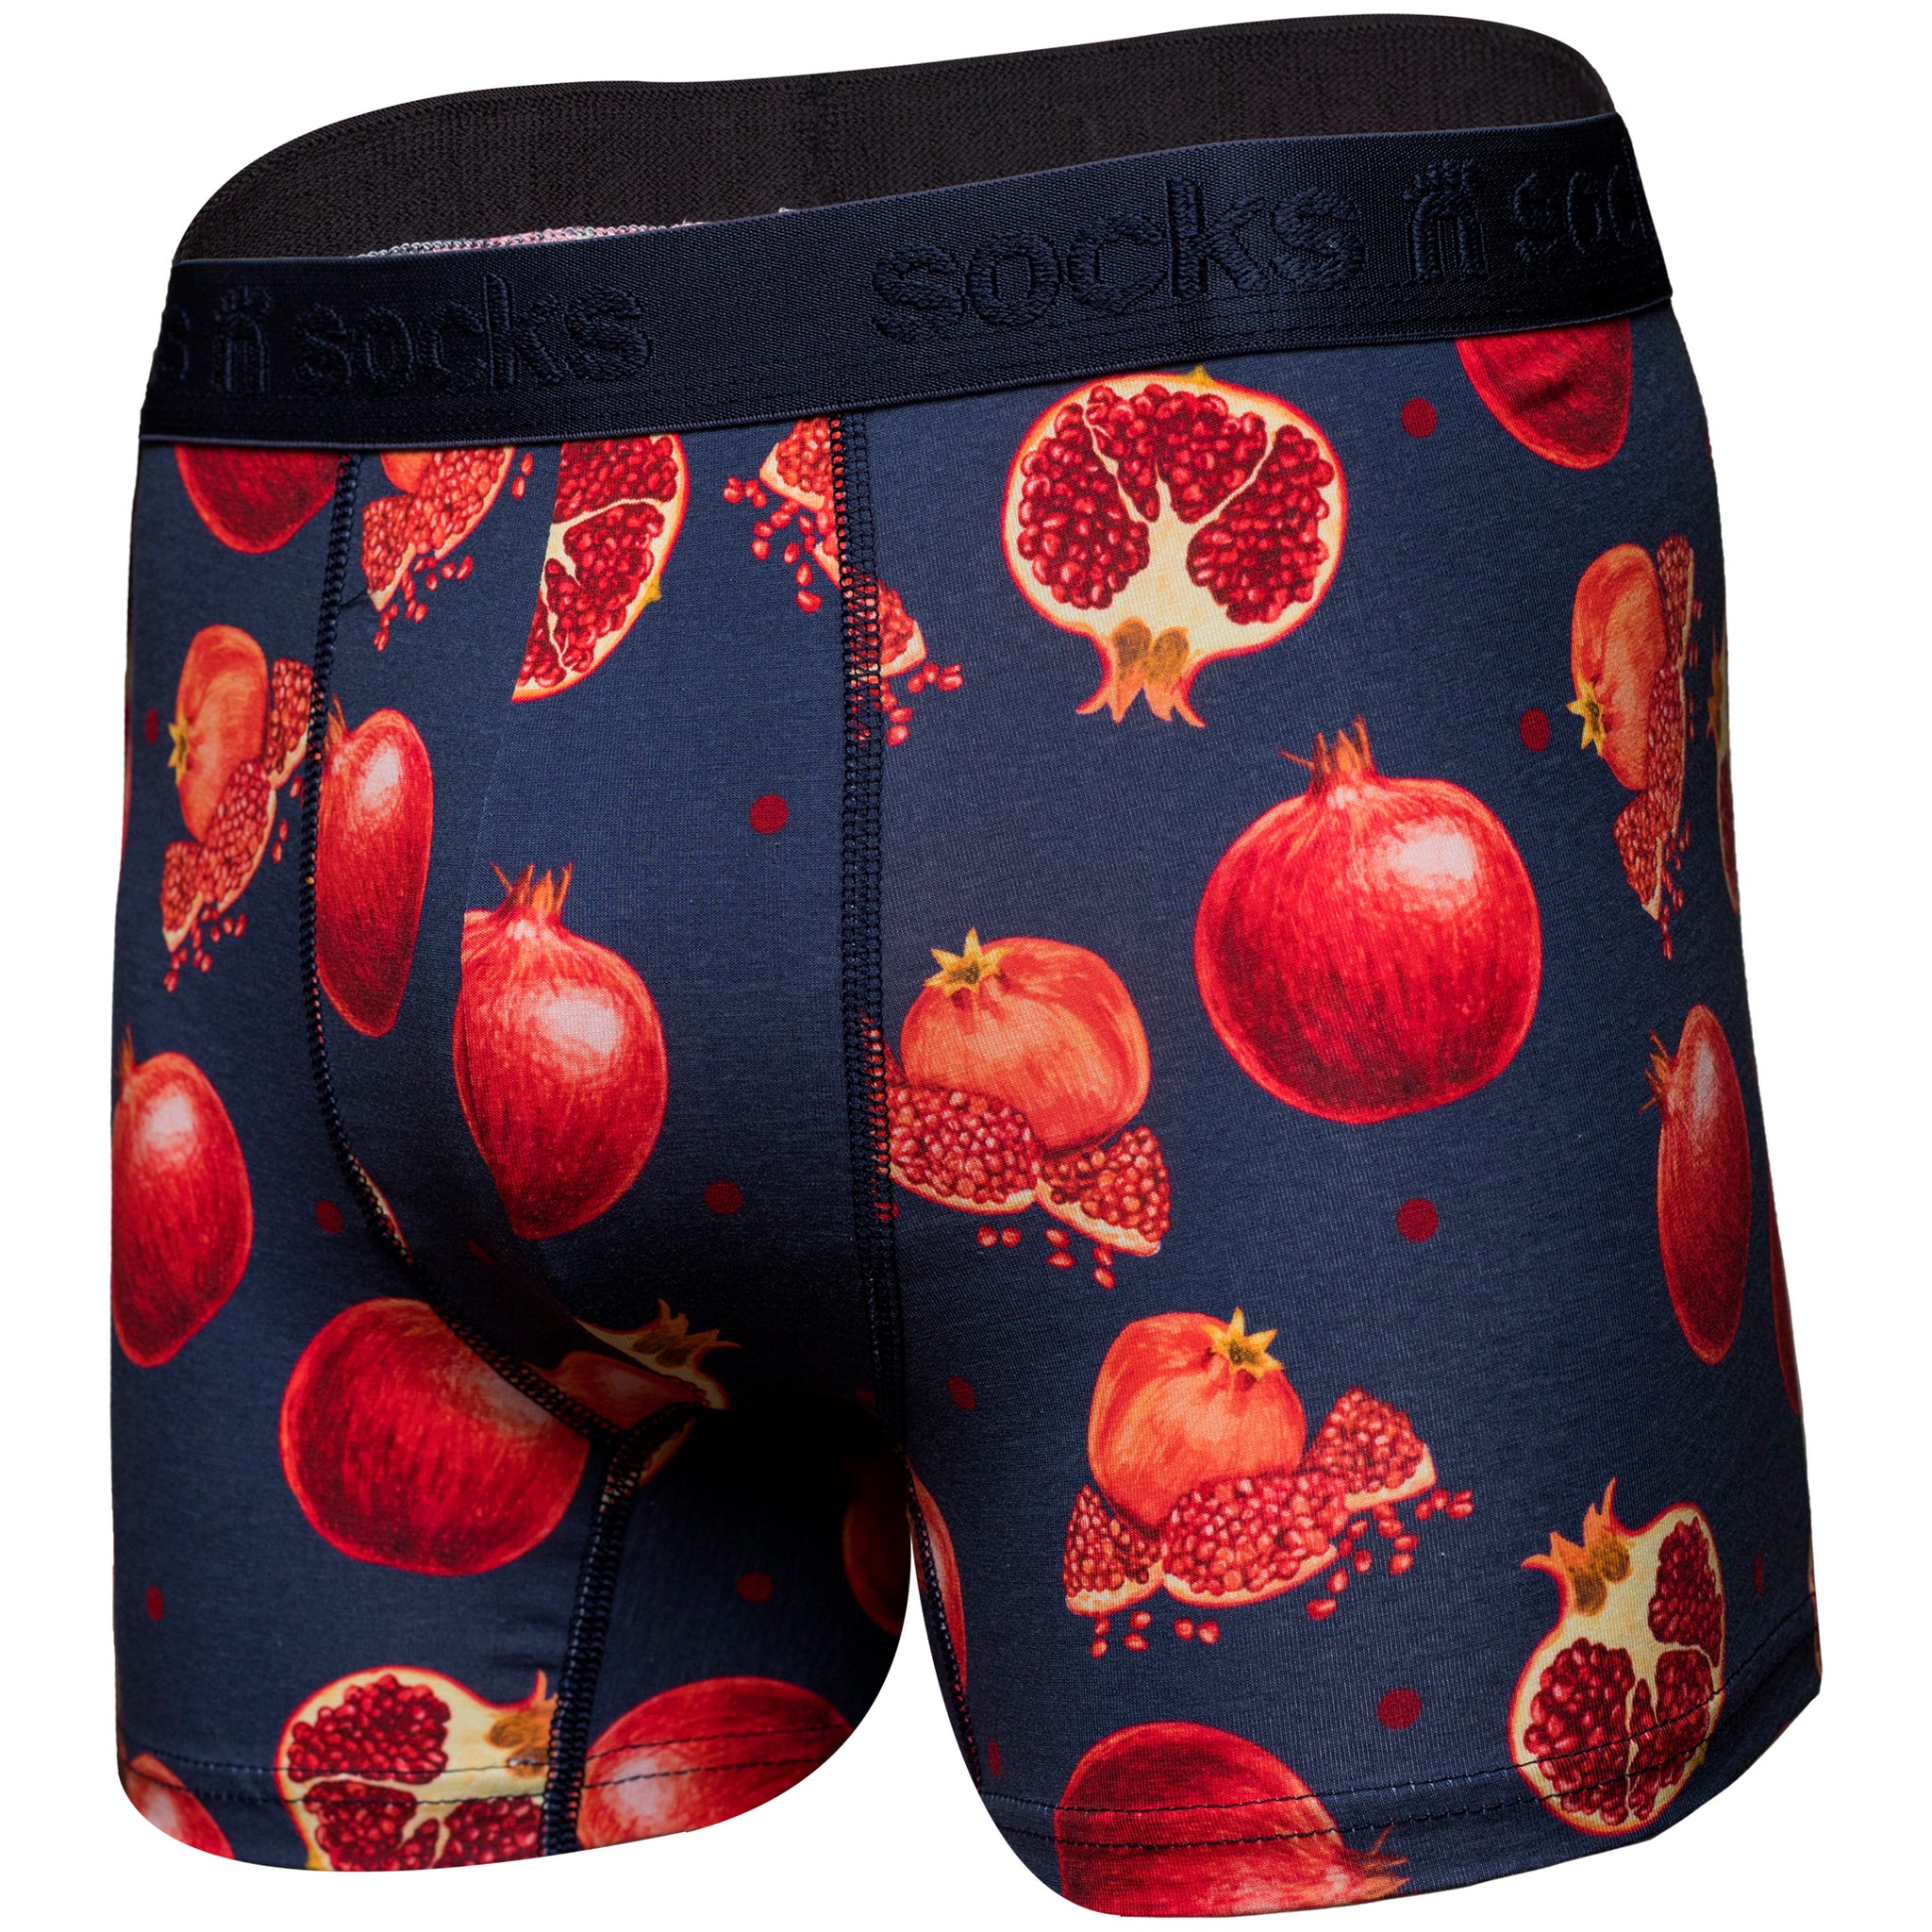 Boxer Brief Fly - Pomegranates